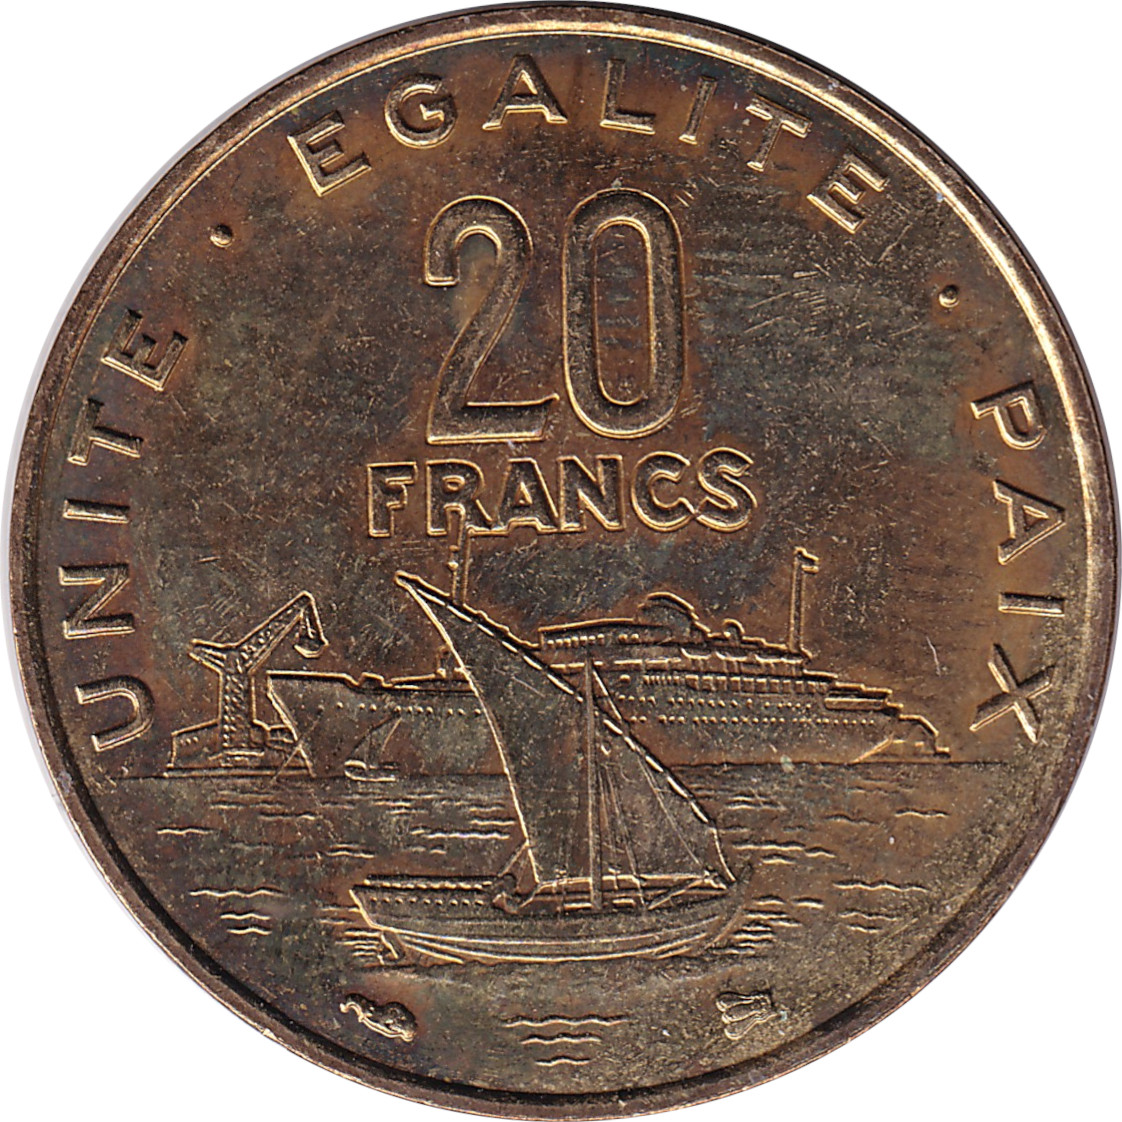 20 francs - Boat